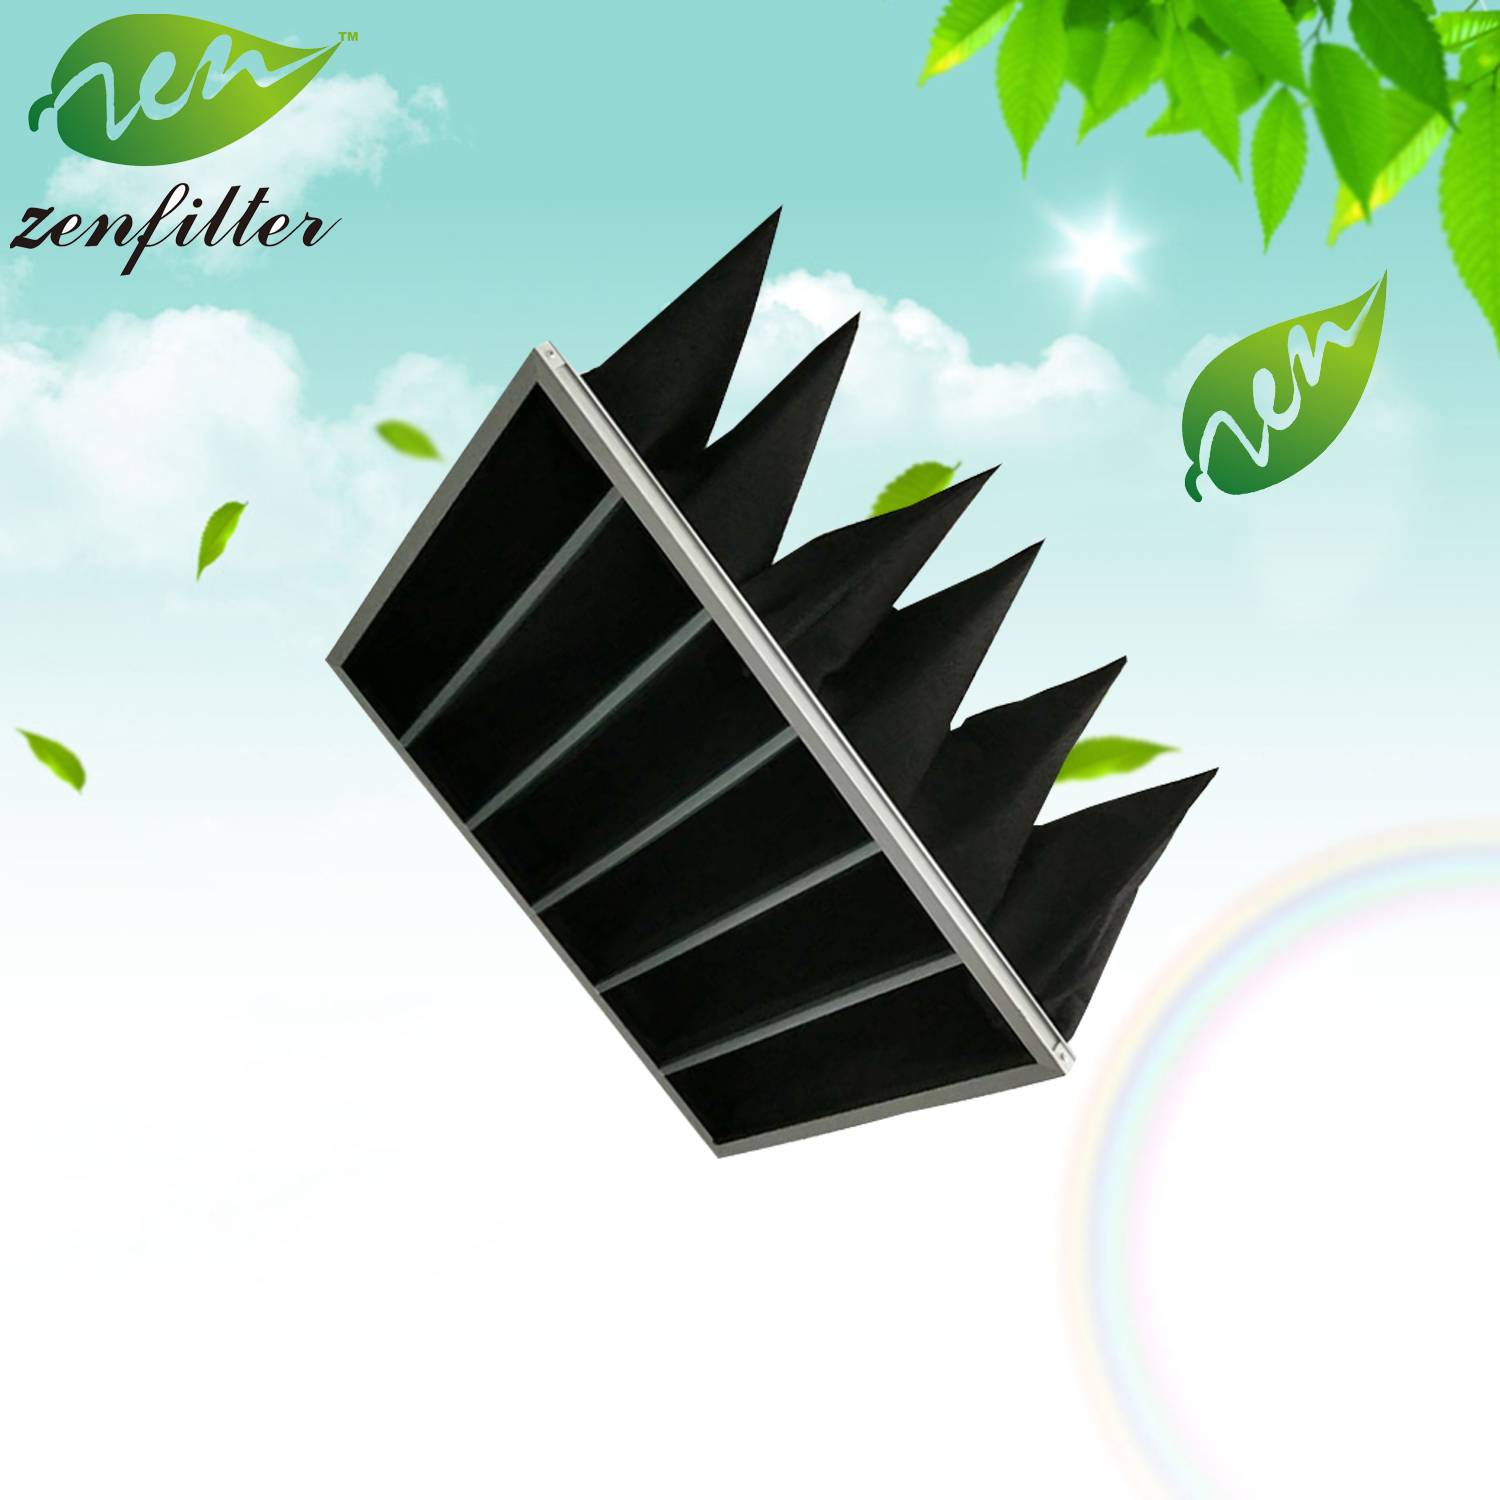 Activate Carbon Pocket (bag) Filter Featured Image